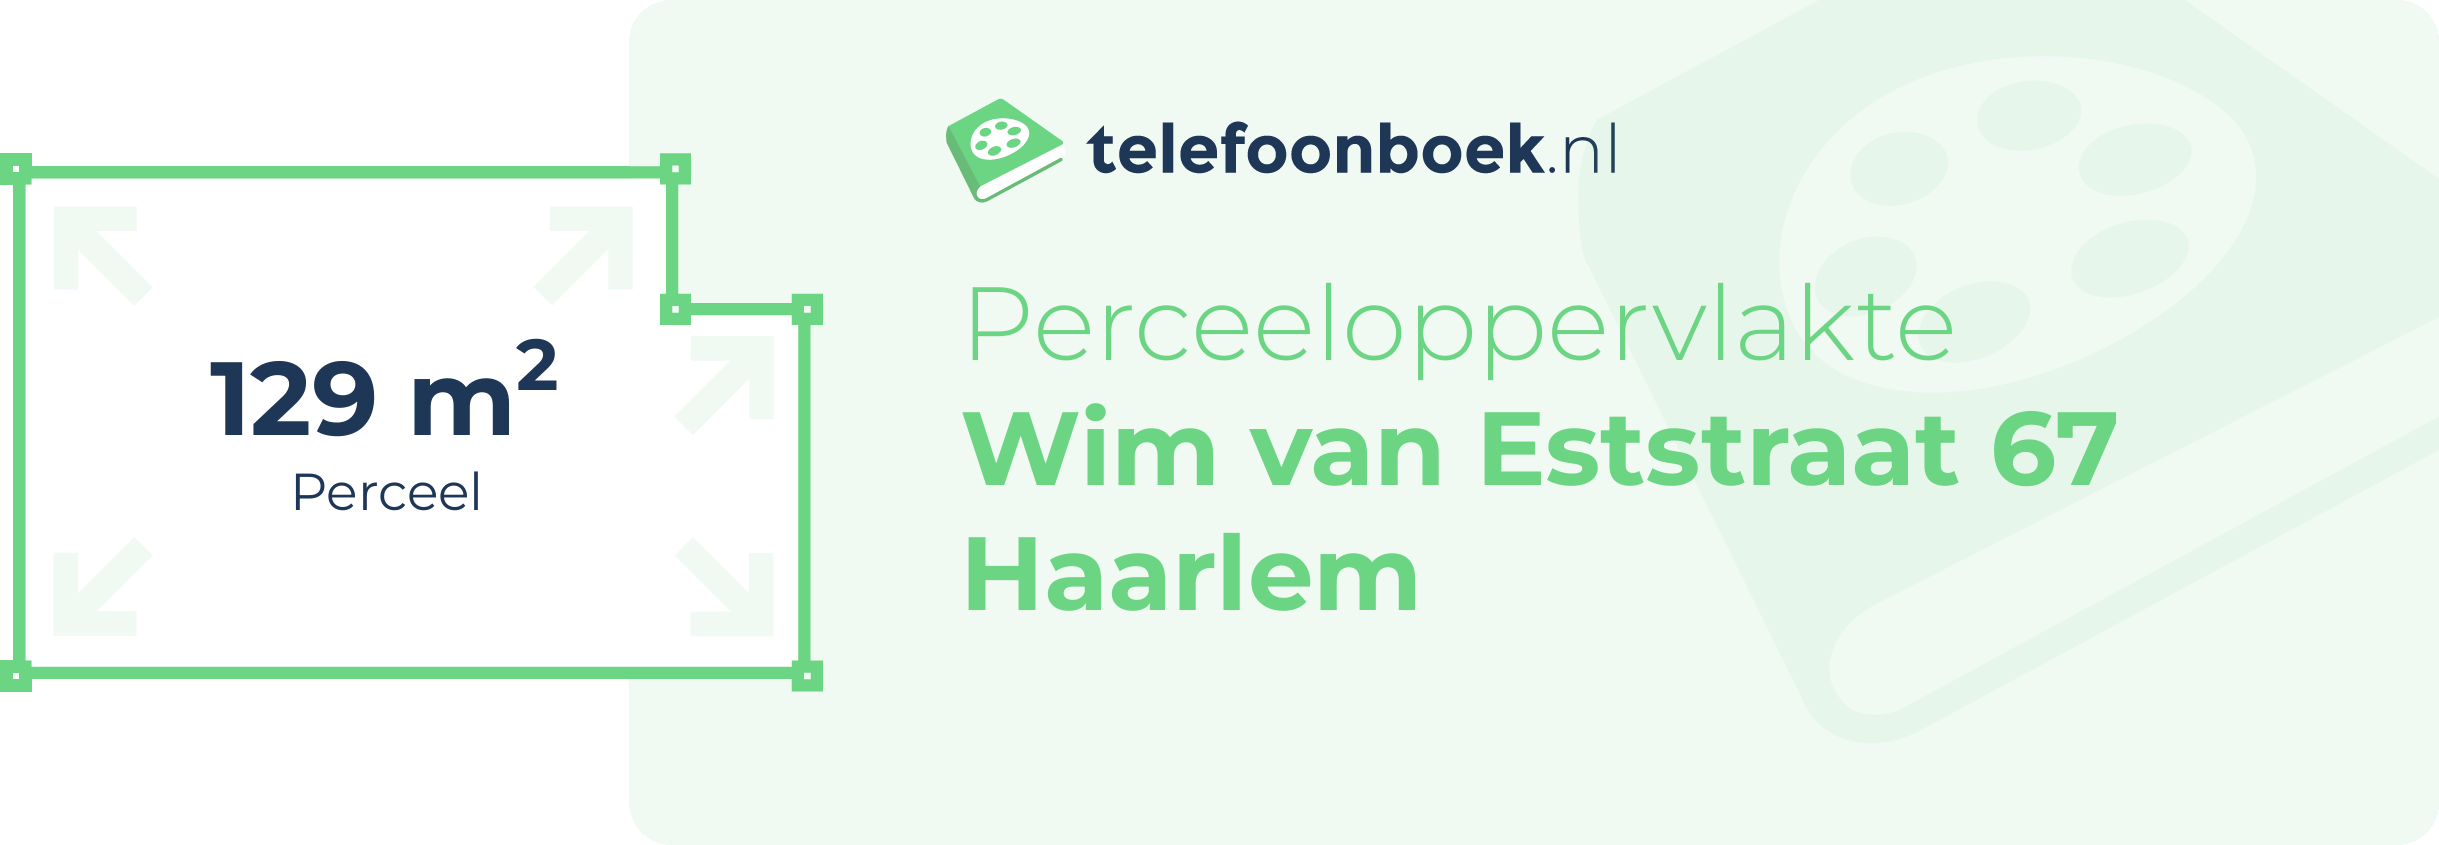 Perceeloppervlakte Wim Van Eststraat 67 Haarlem